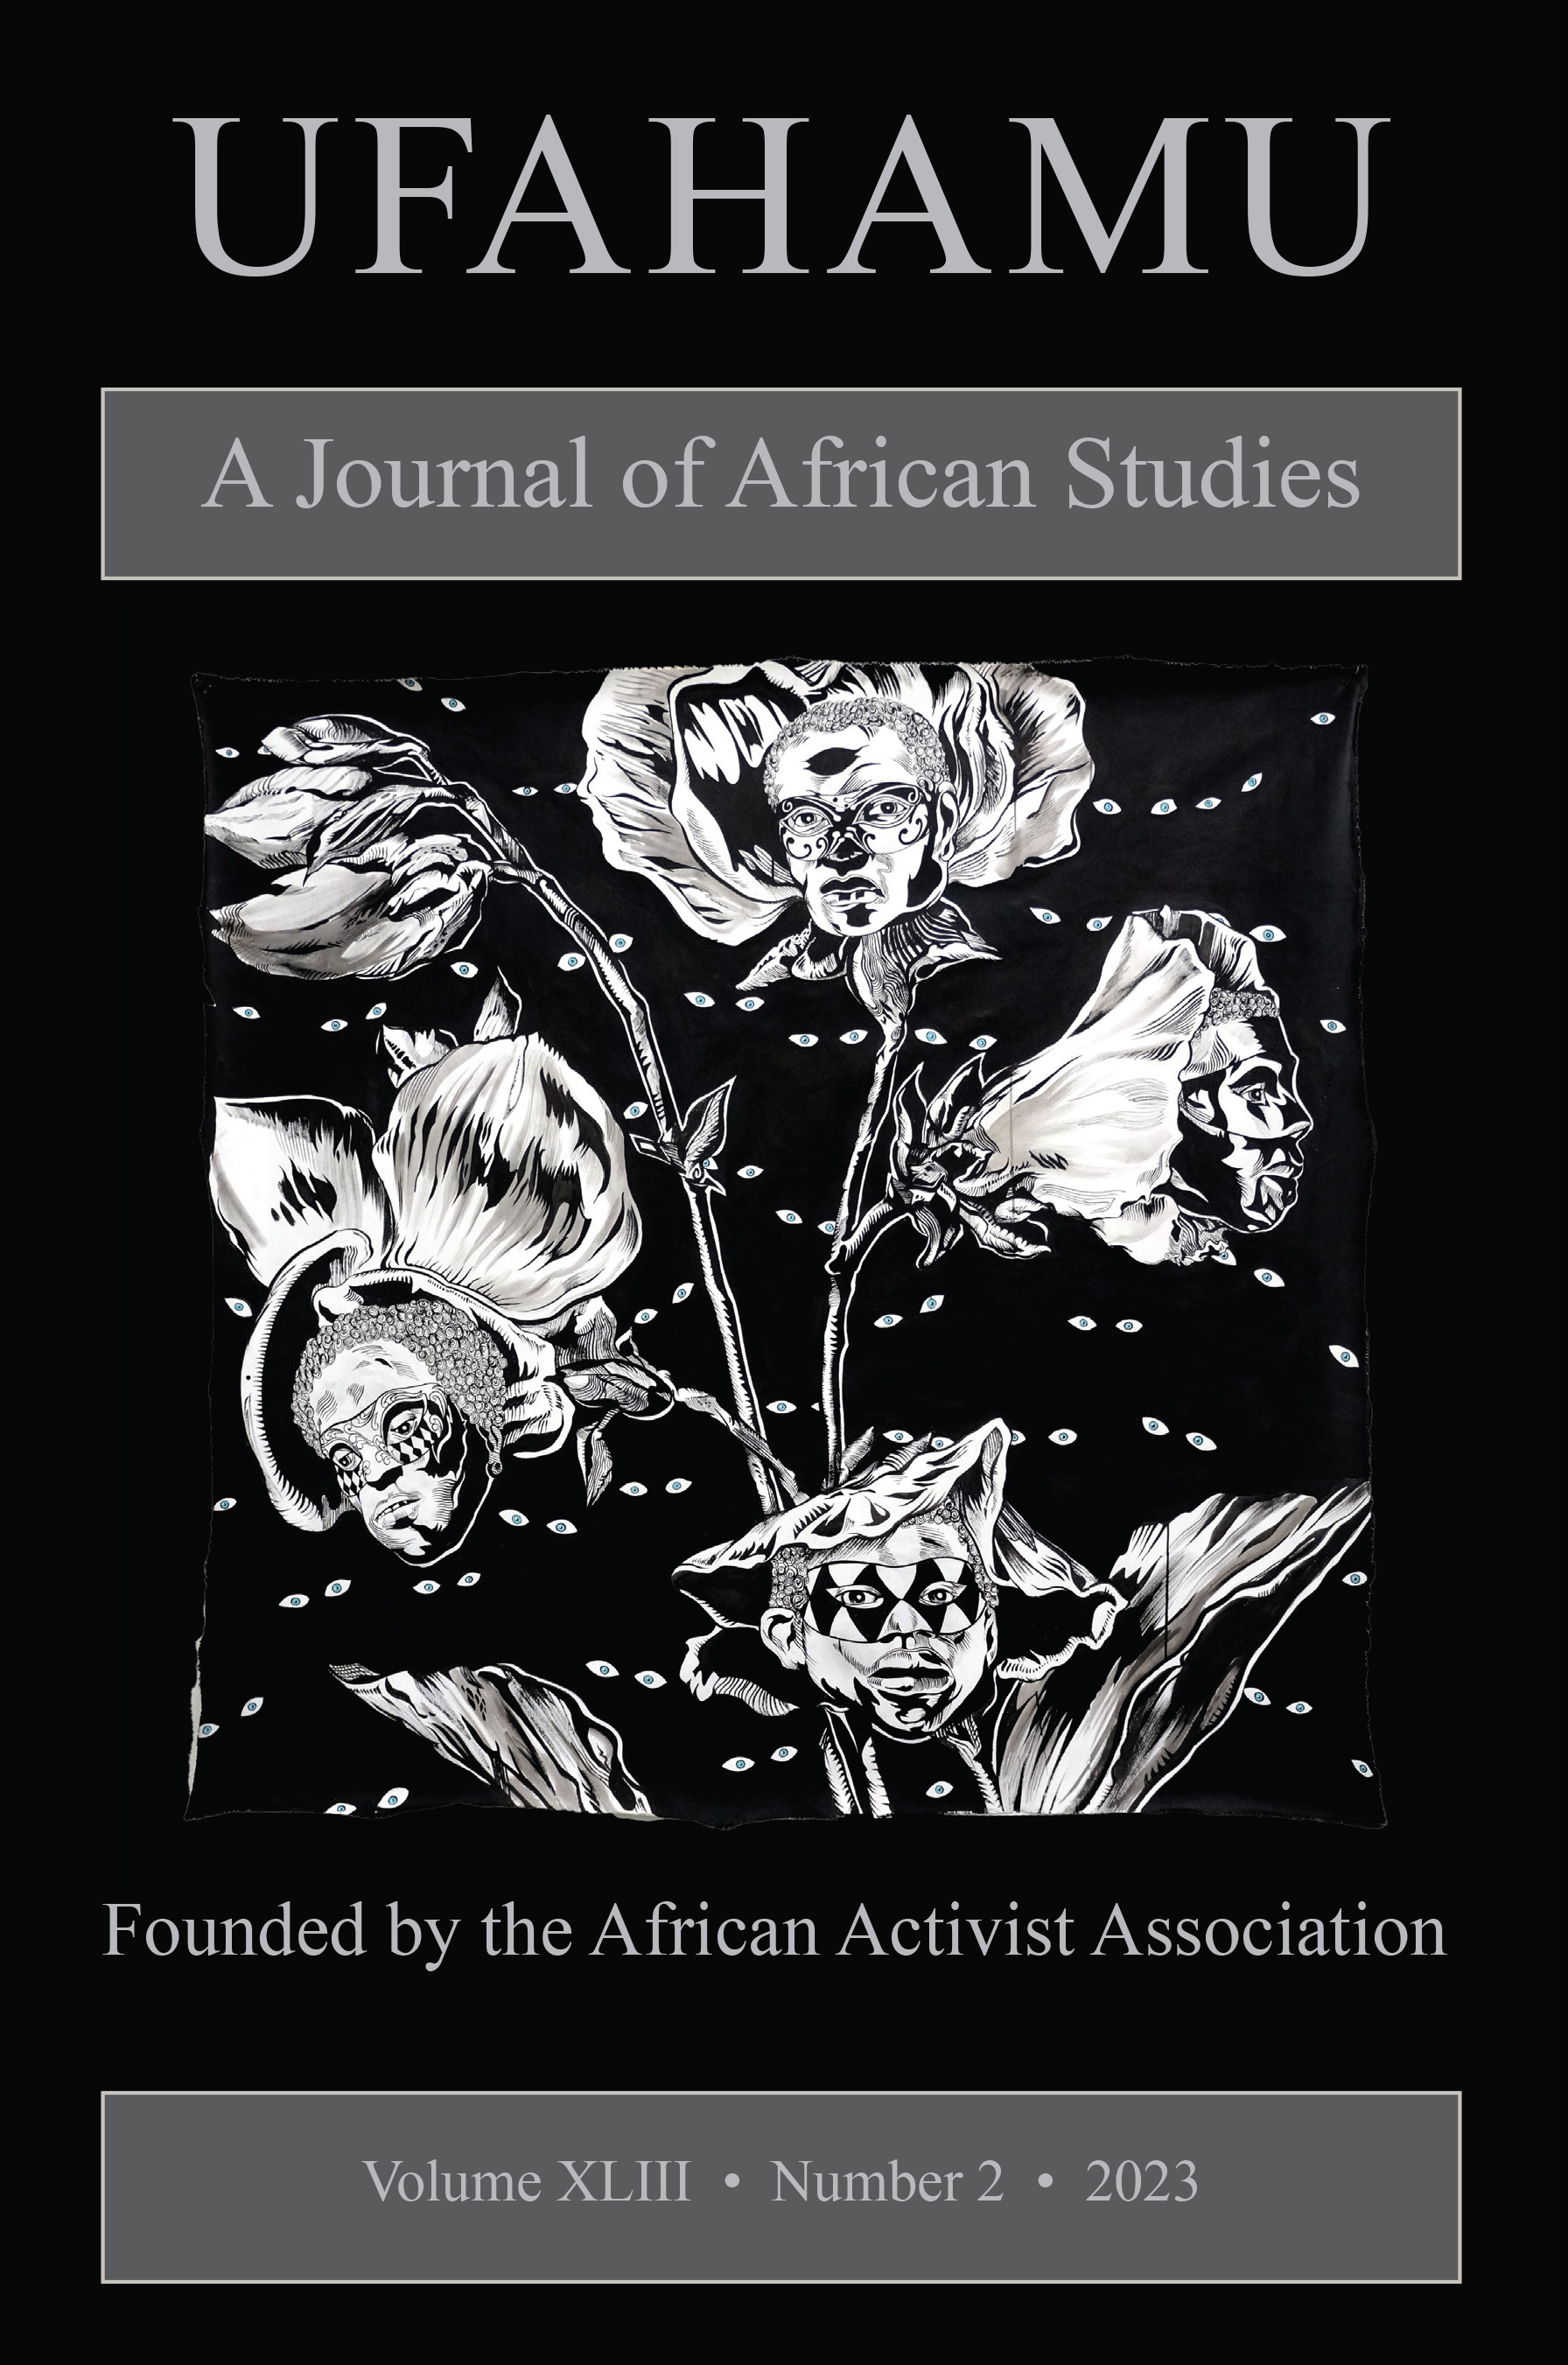 Ufahamu: A Journal of African Studies